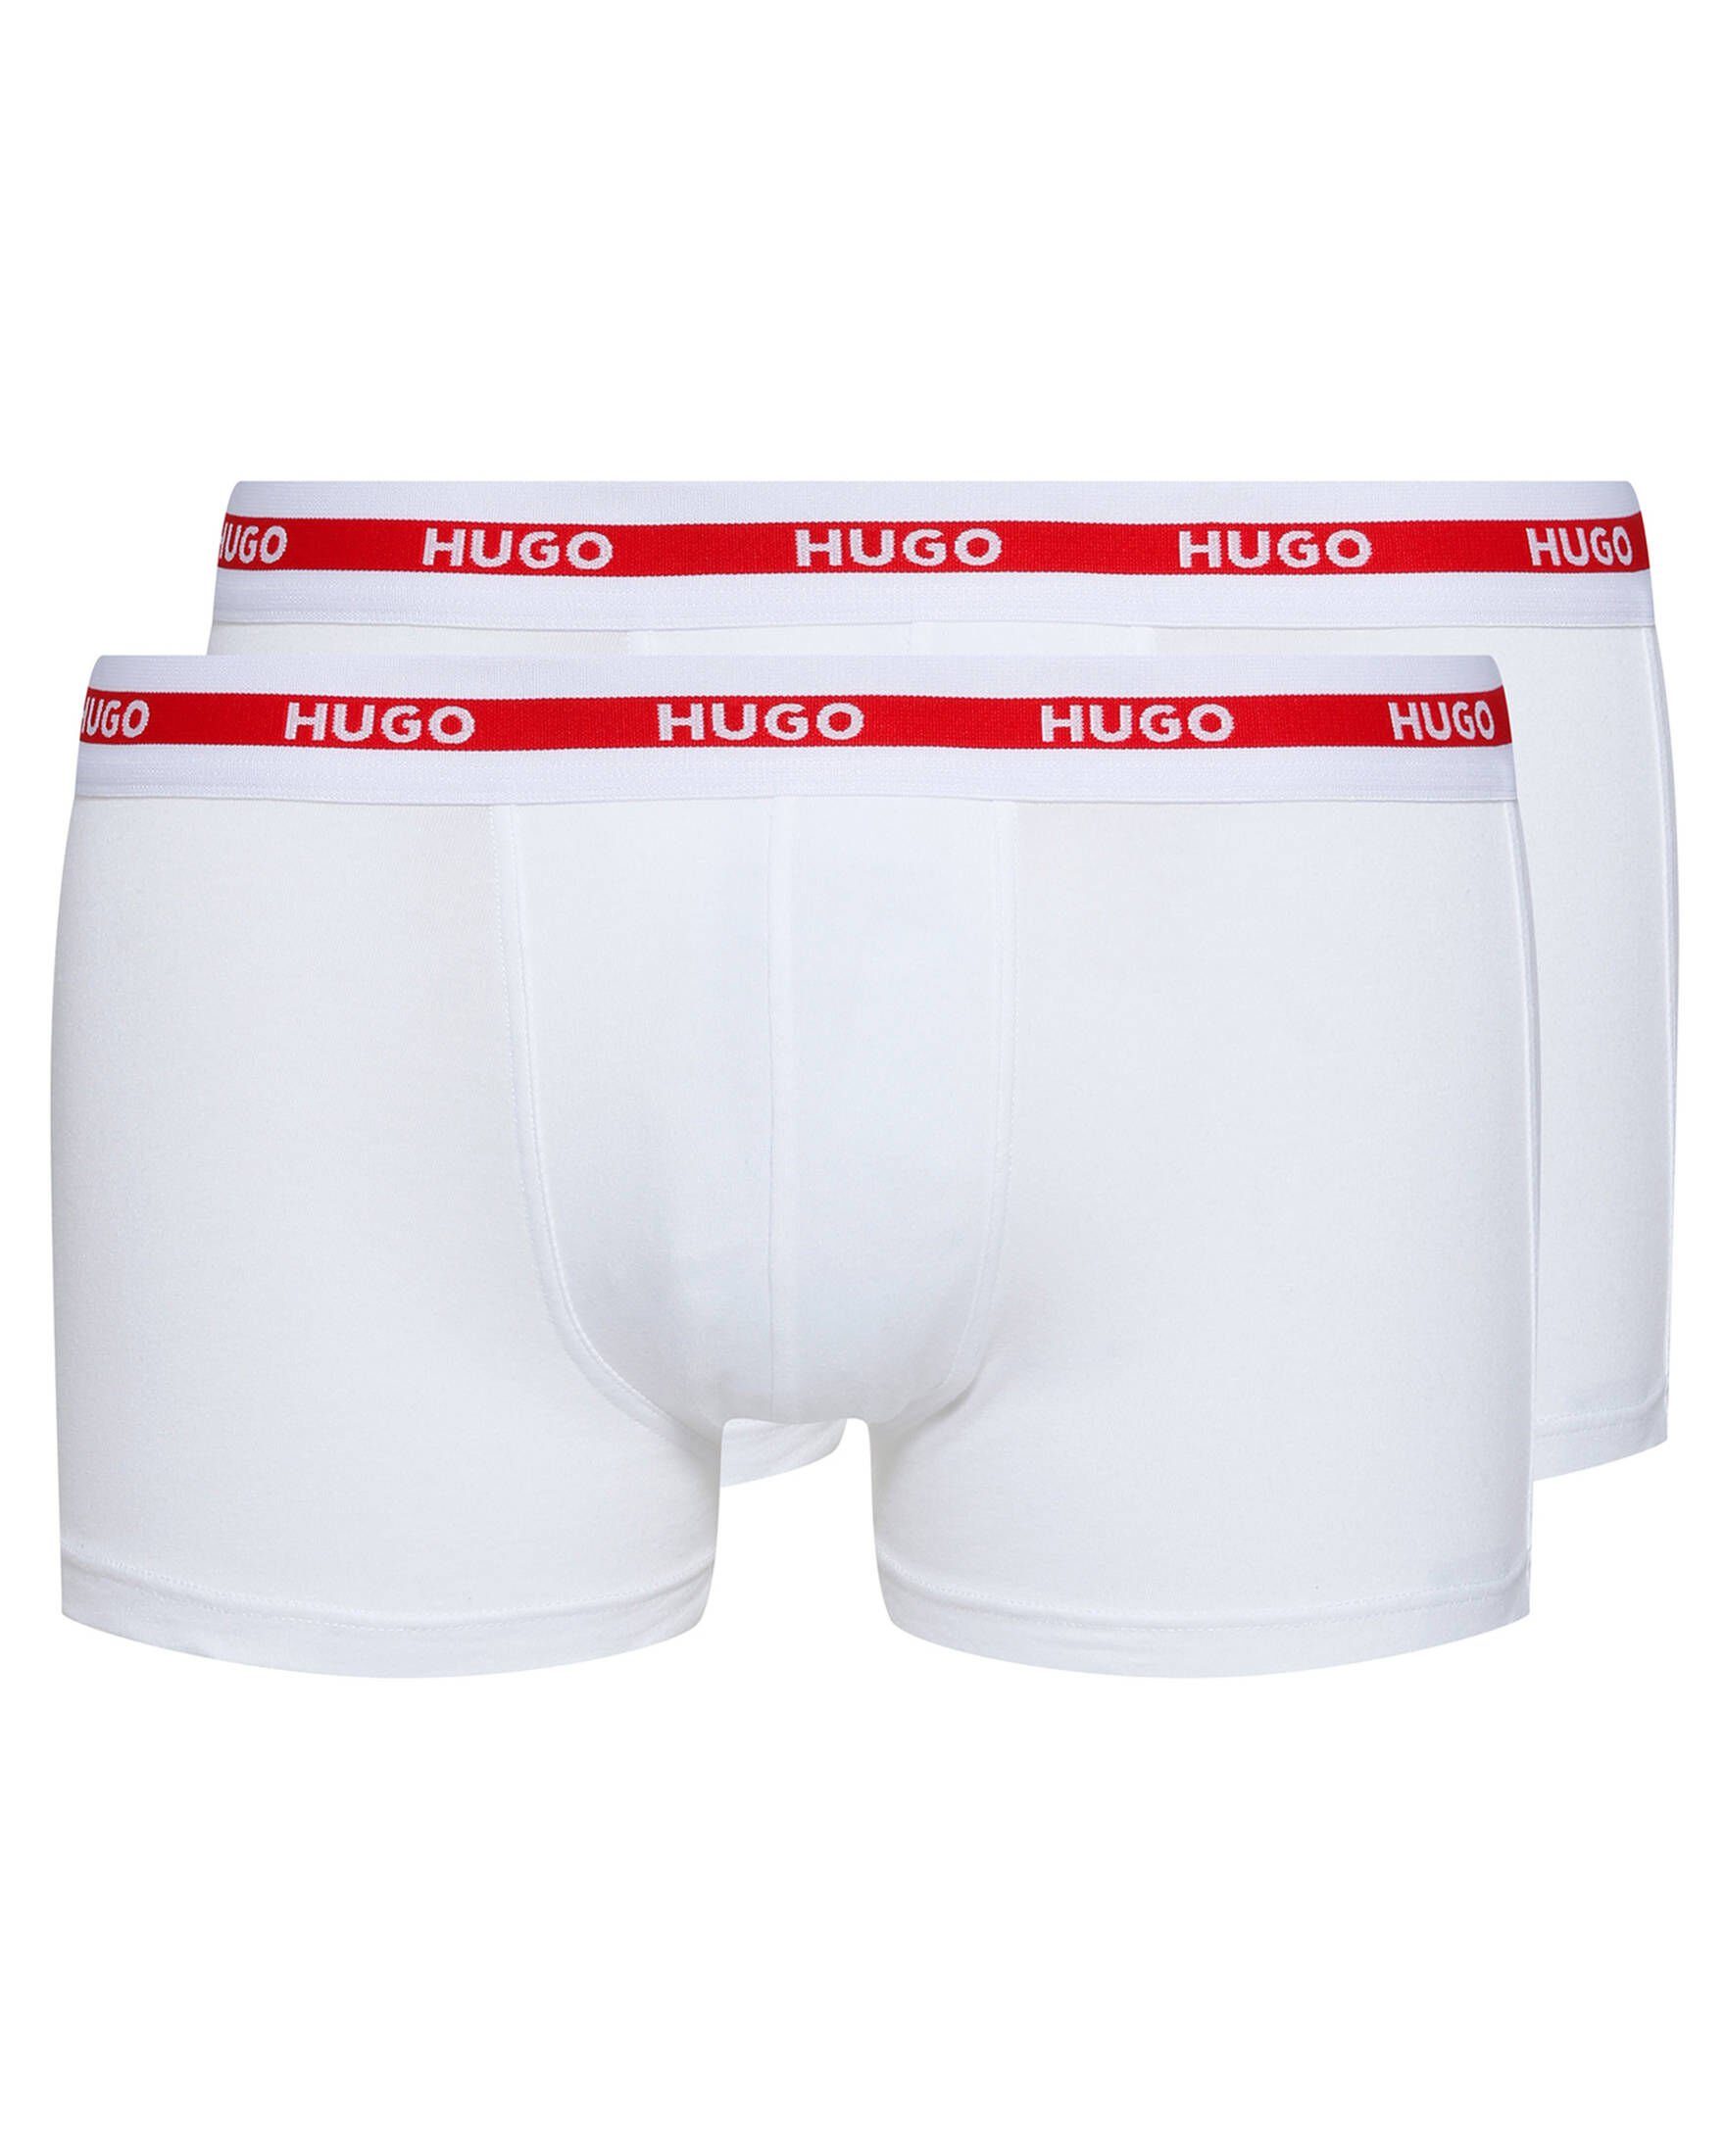 (10) TRUNK 2er-Set HUGO (3-St) TWIN Pants Herren PACK Retro Retropants weiss